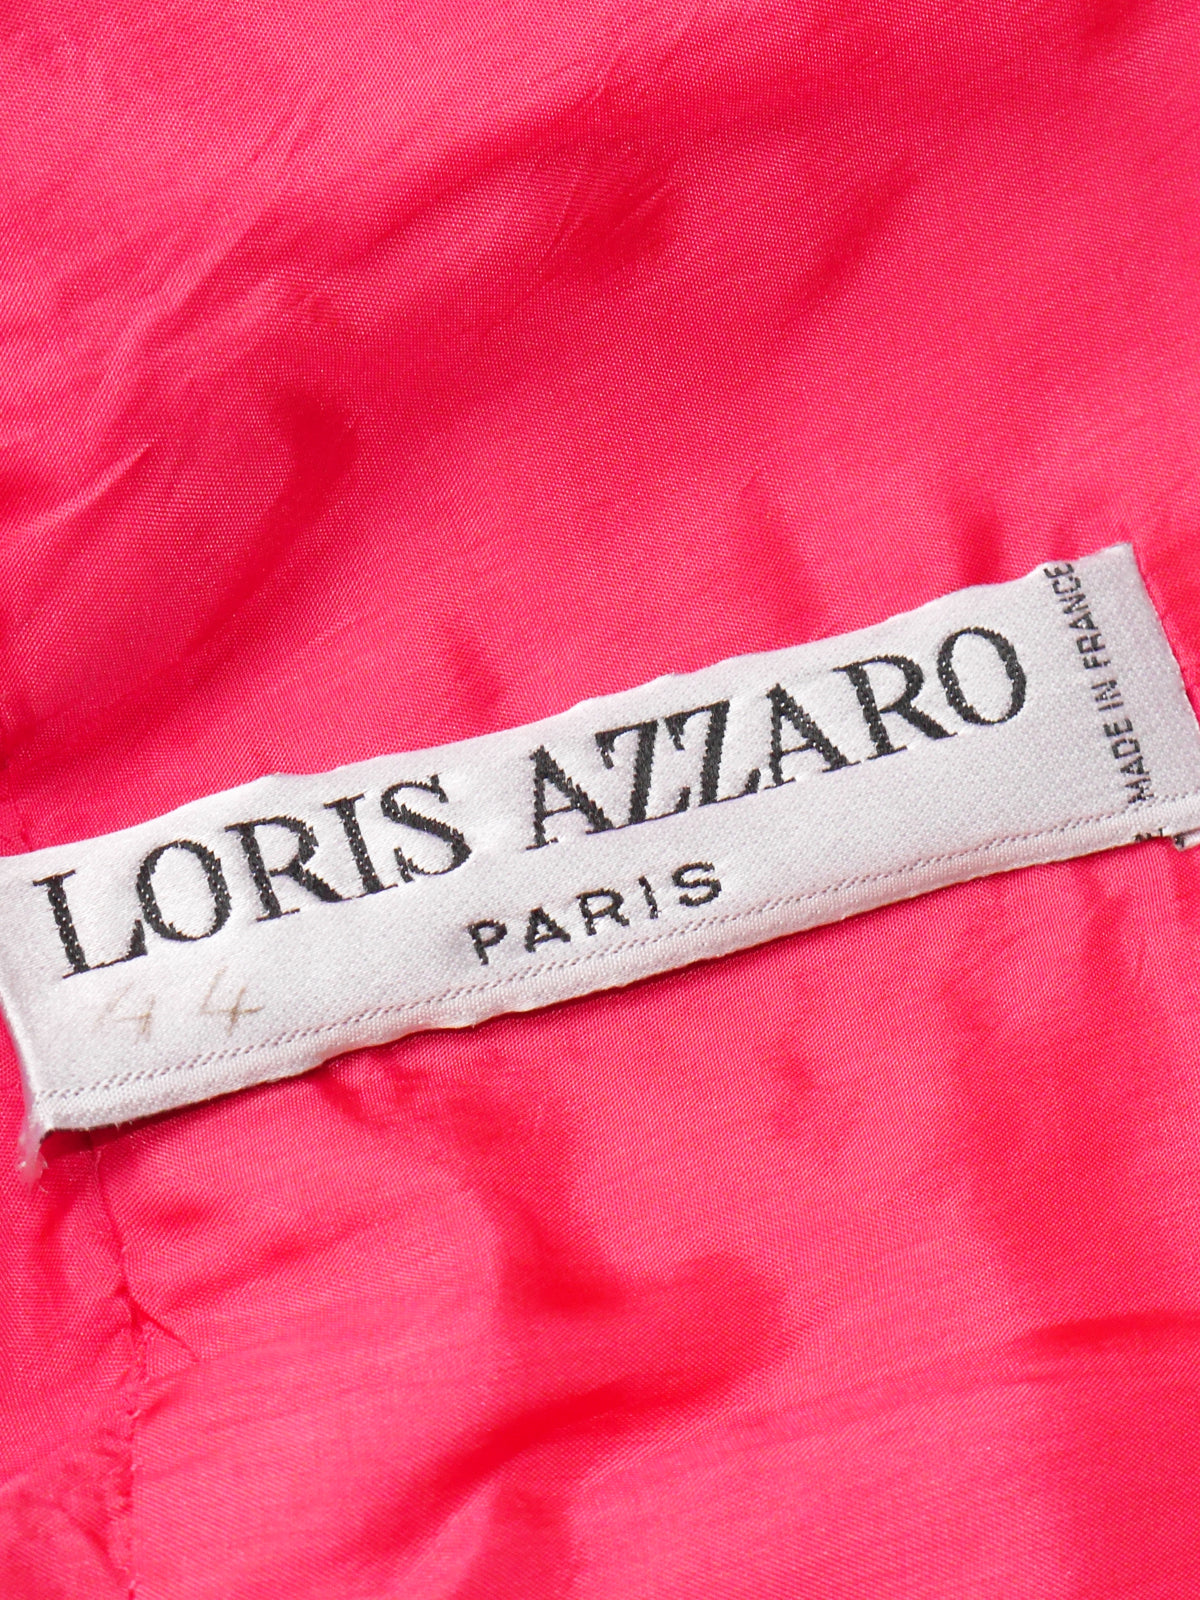 LORIS AZZARO Vintage Pink Draped Silk Maxi Evening Gown Pink Size S